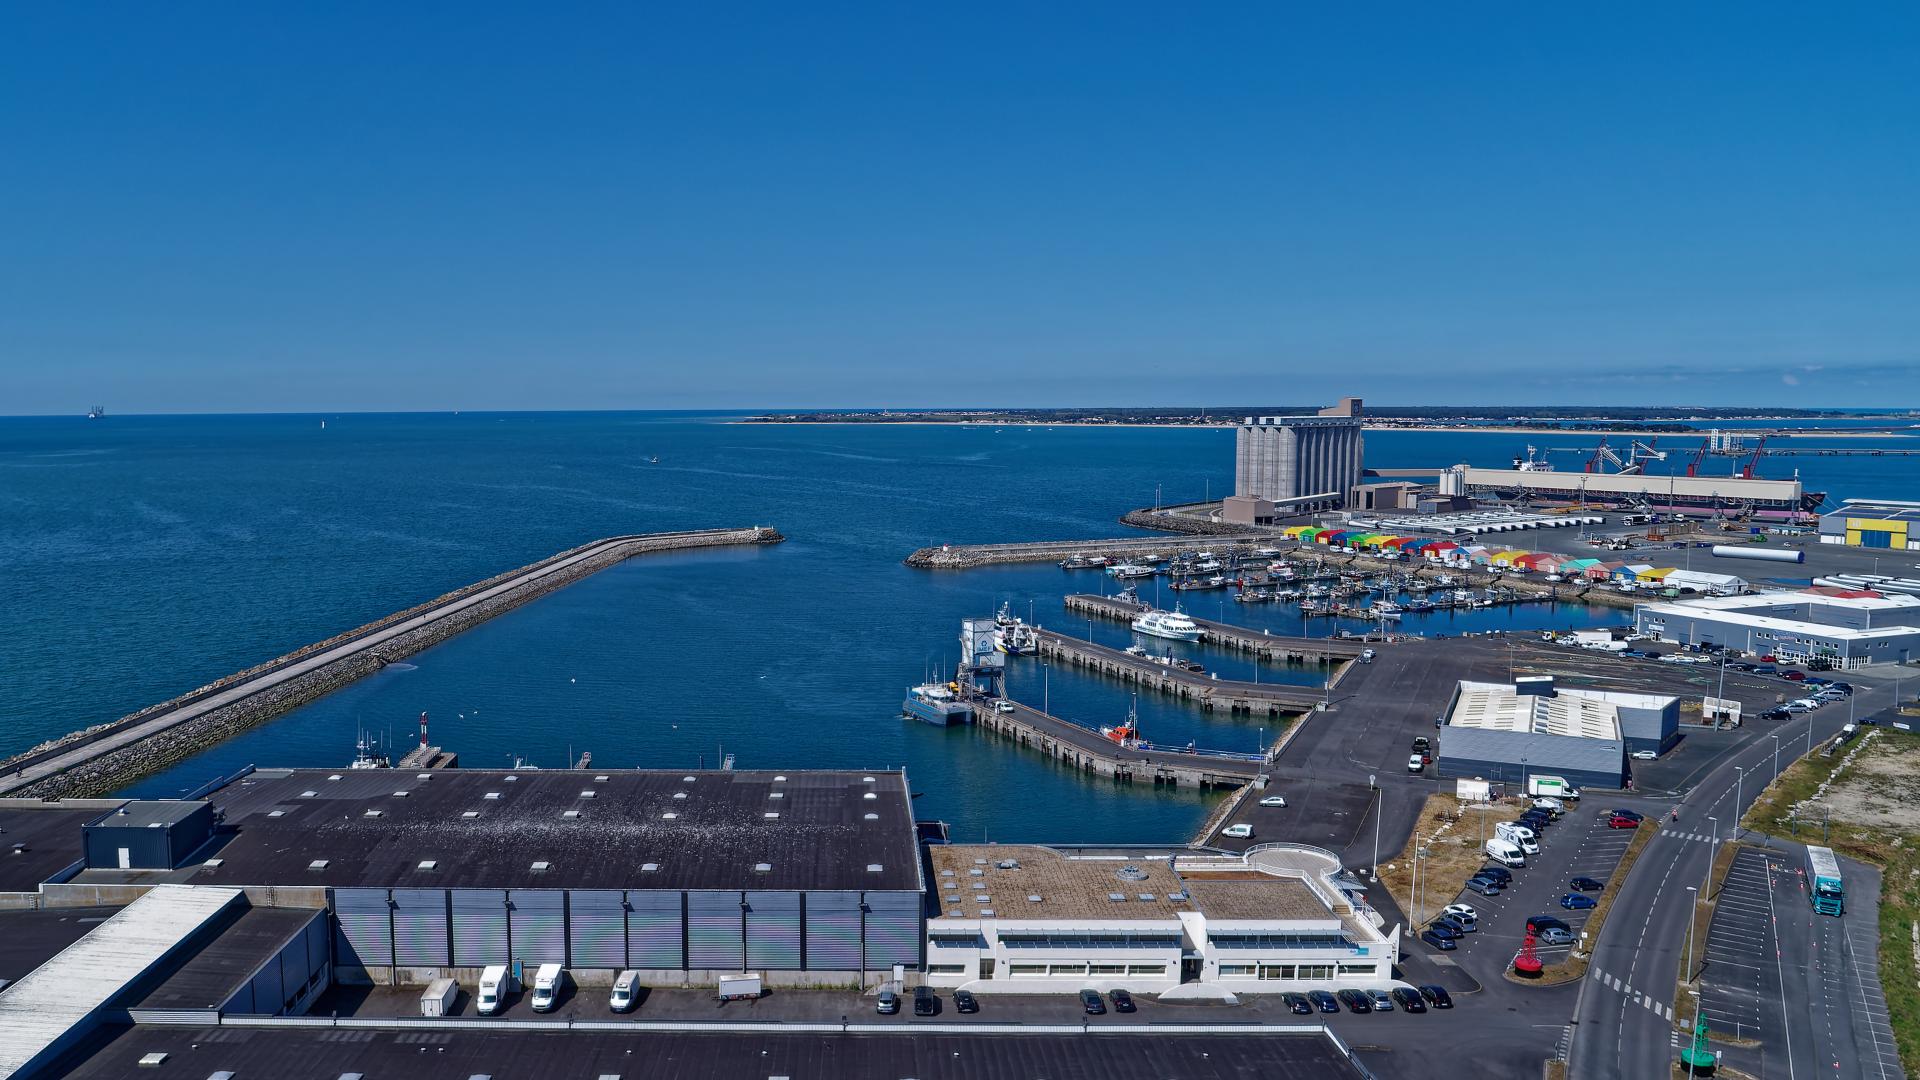 Port de La Rochelle